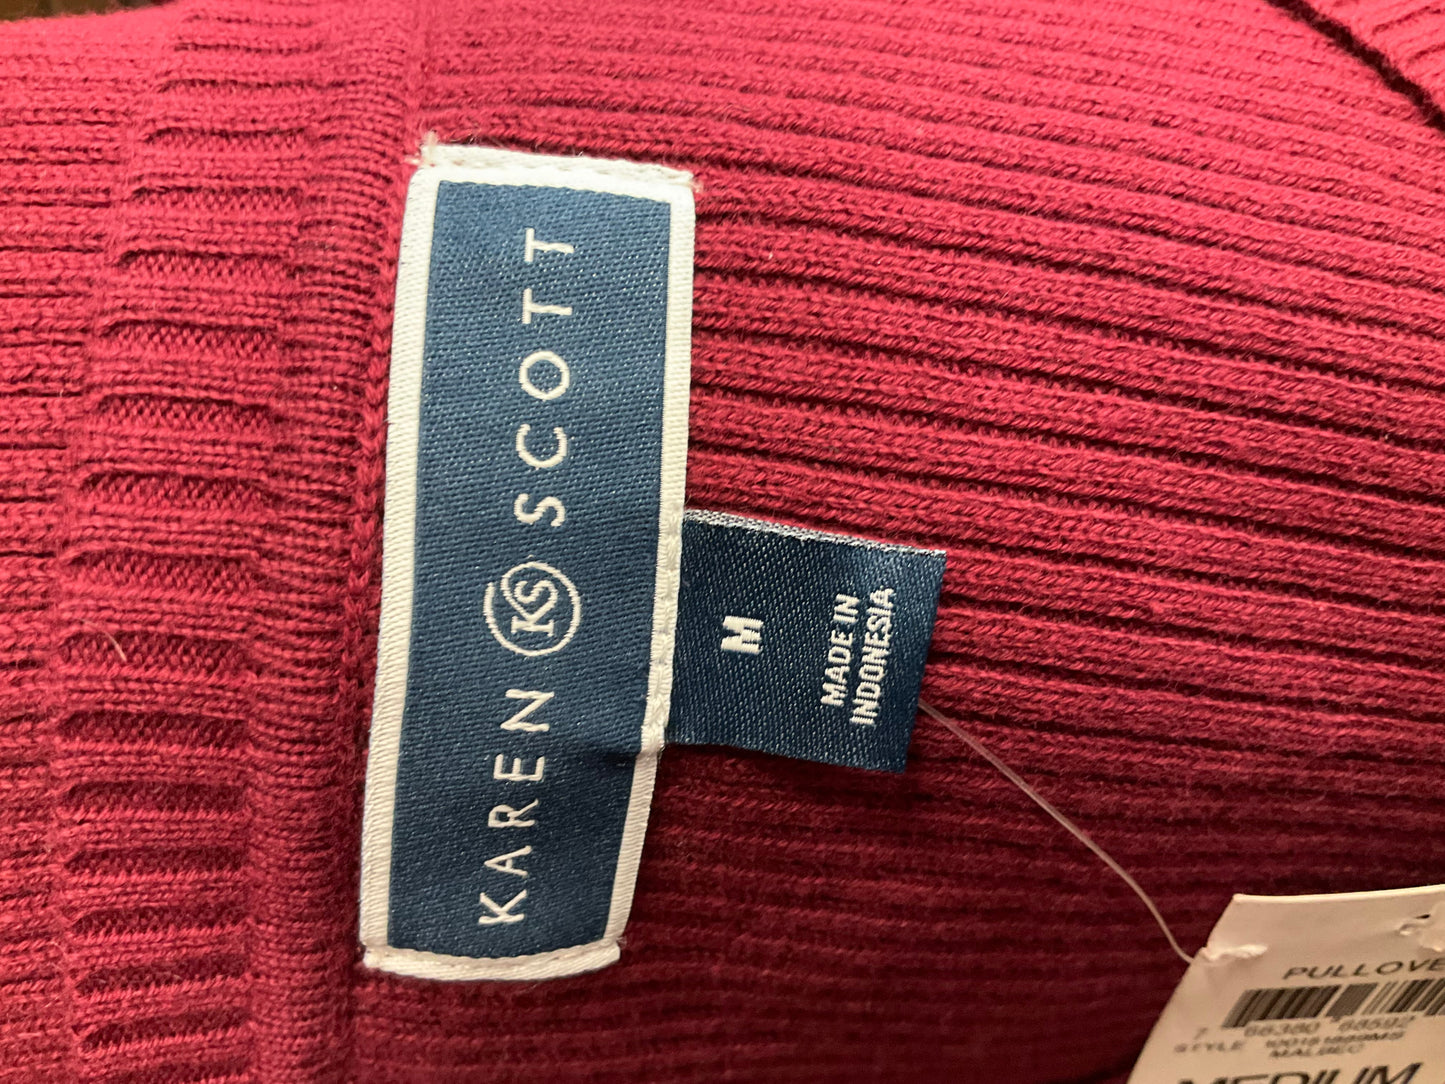 Red Sweater Karen Scott, Size M